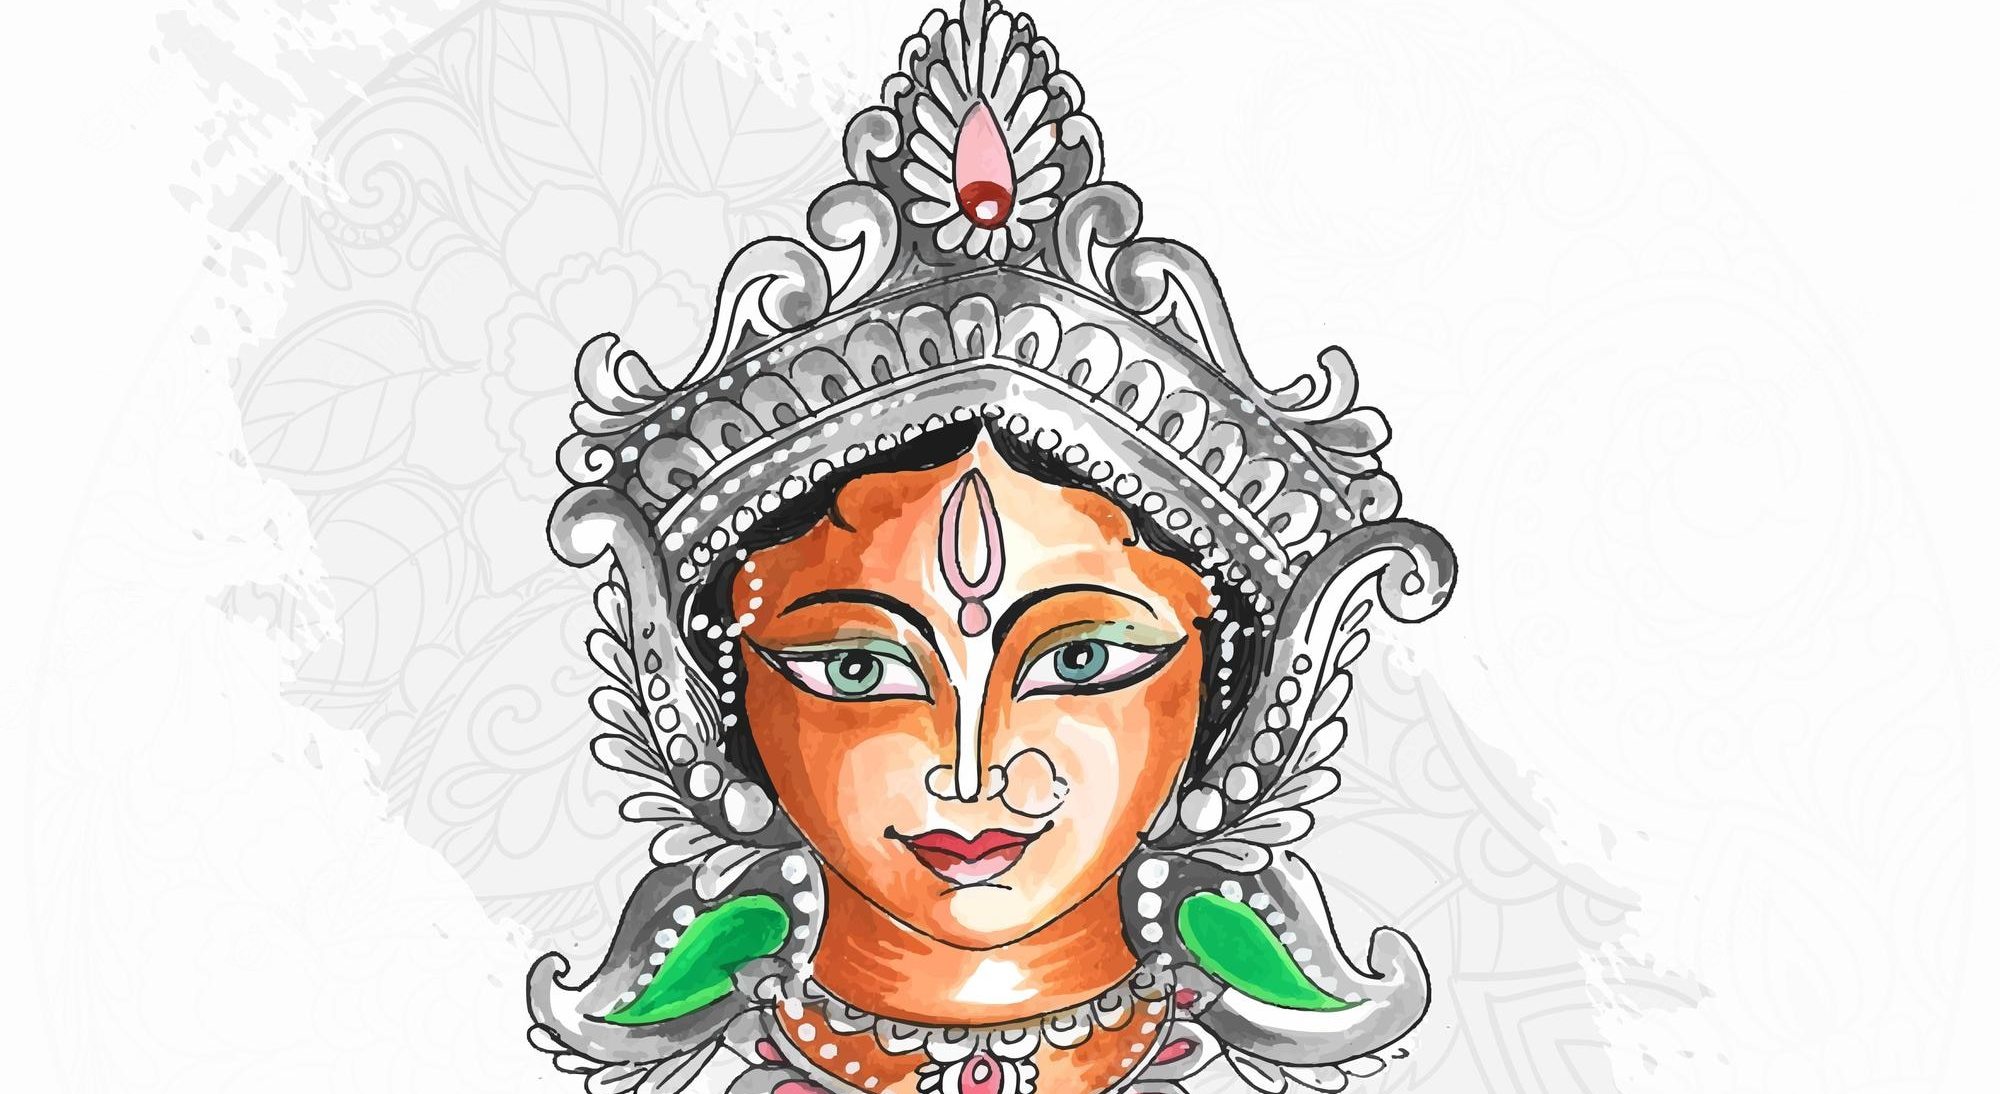 Durga puja mondop drwaing | Photoskart